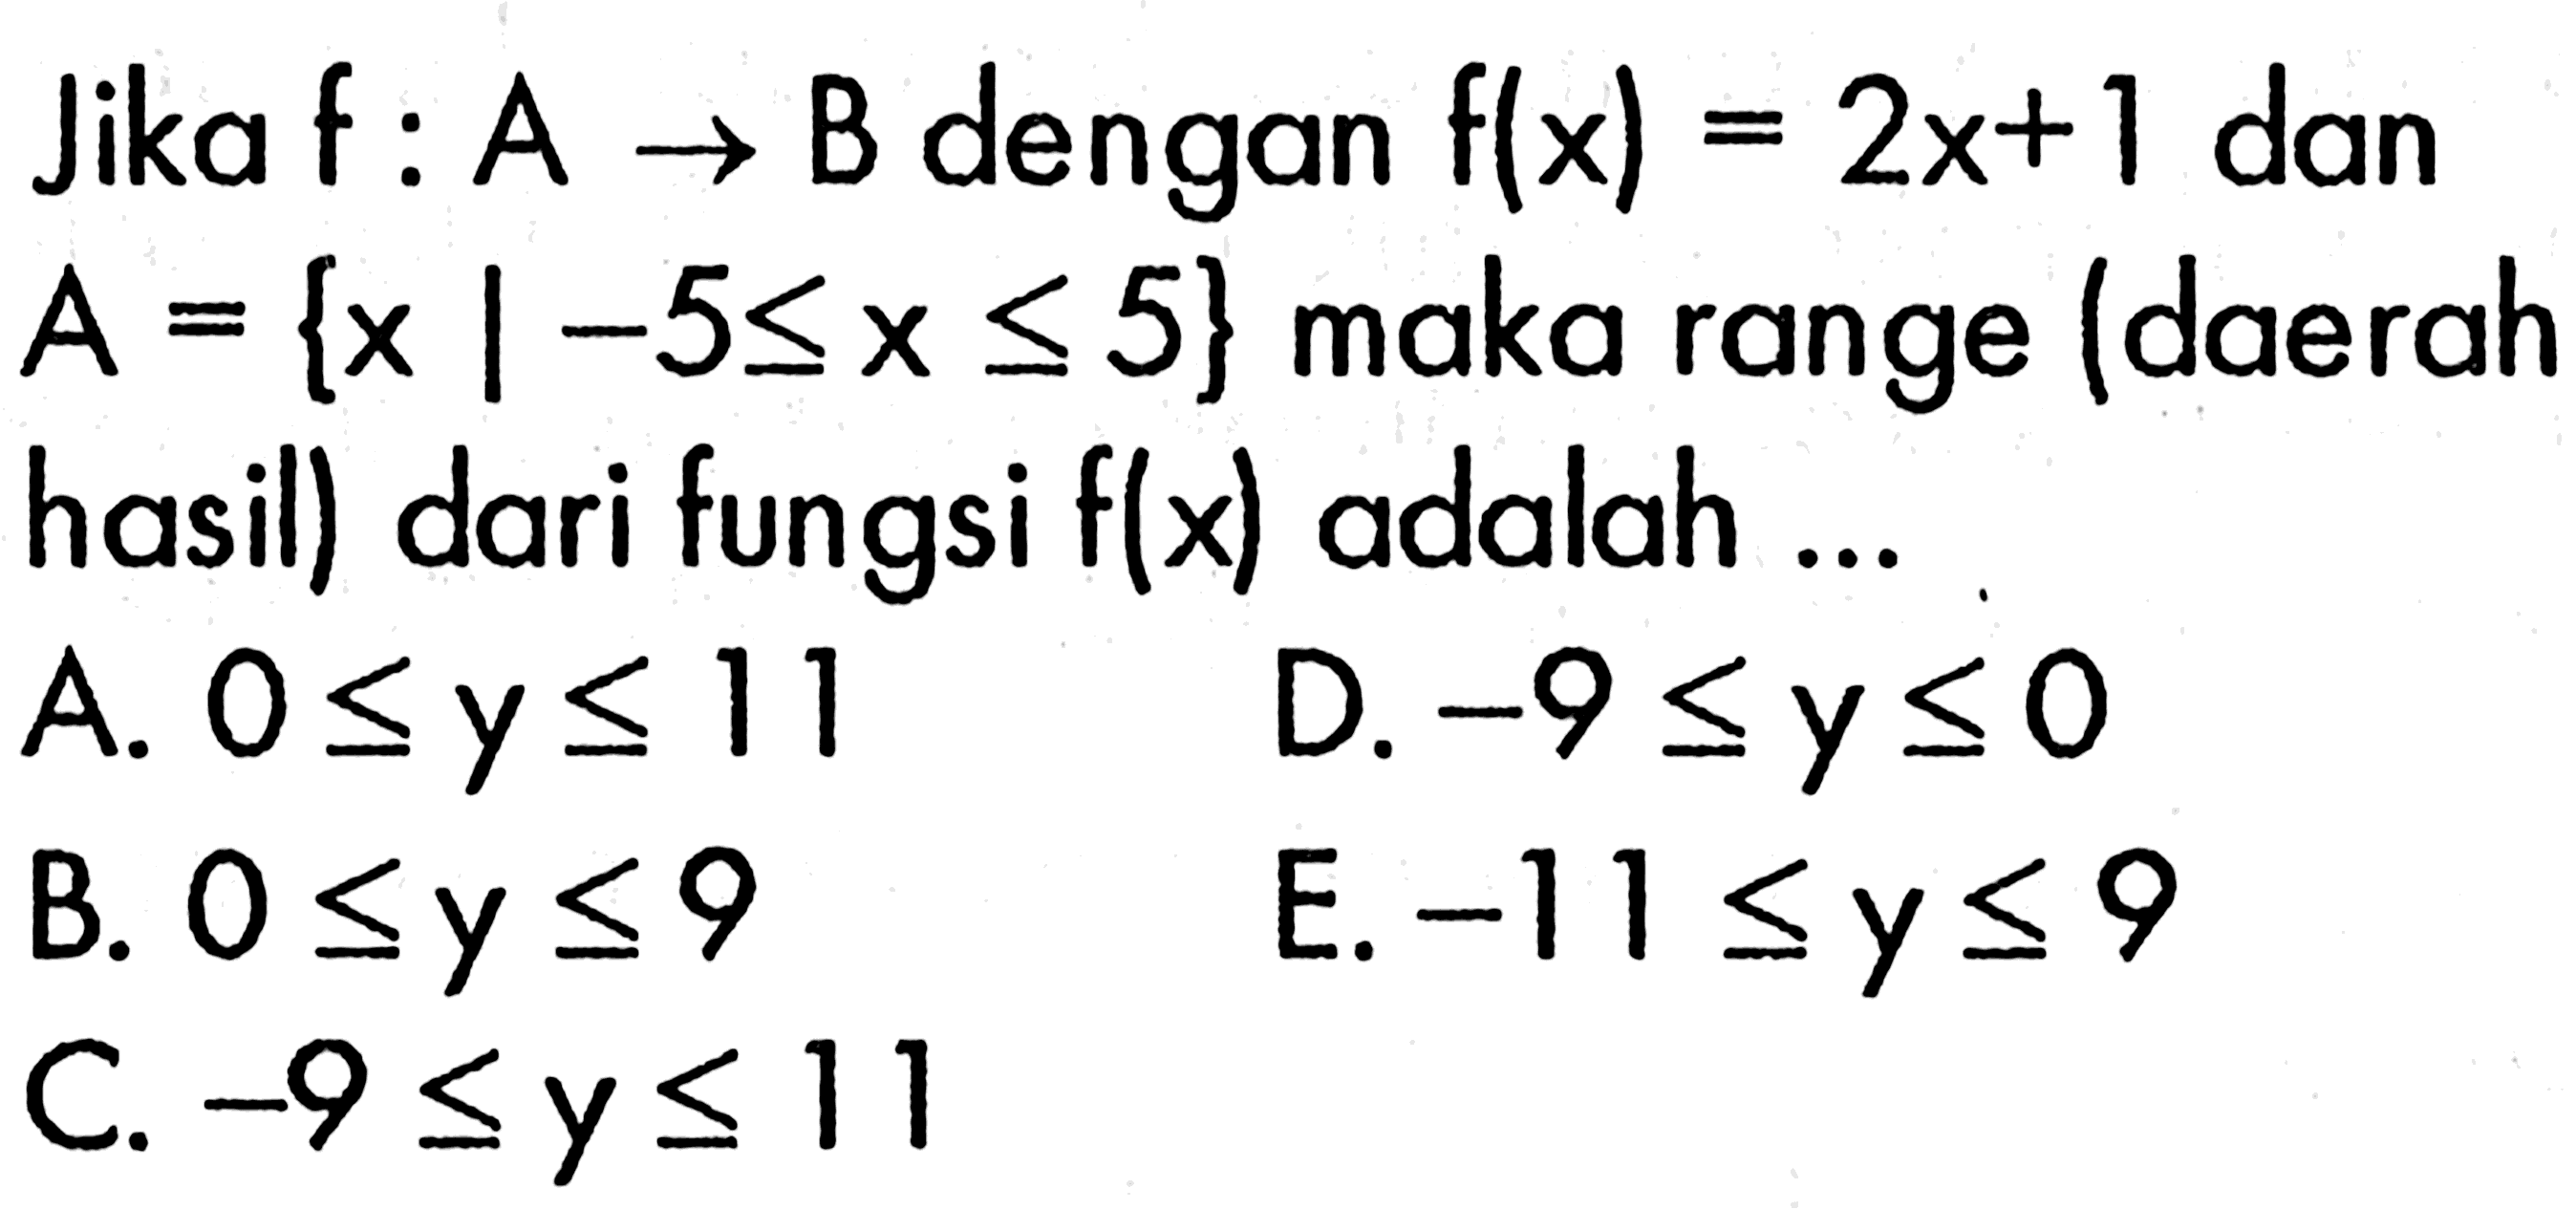 Jika f:A->B dengan f(x)=2 x+1 dan A={x|-5<=x<=5} maka range (daerah hasil) dari fungsi f(x) adalah ...